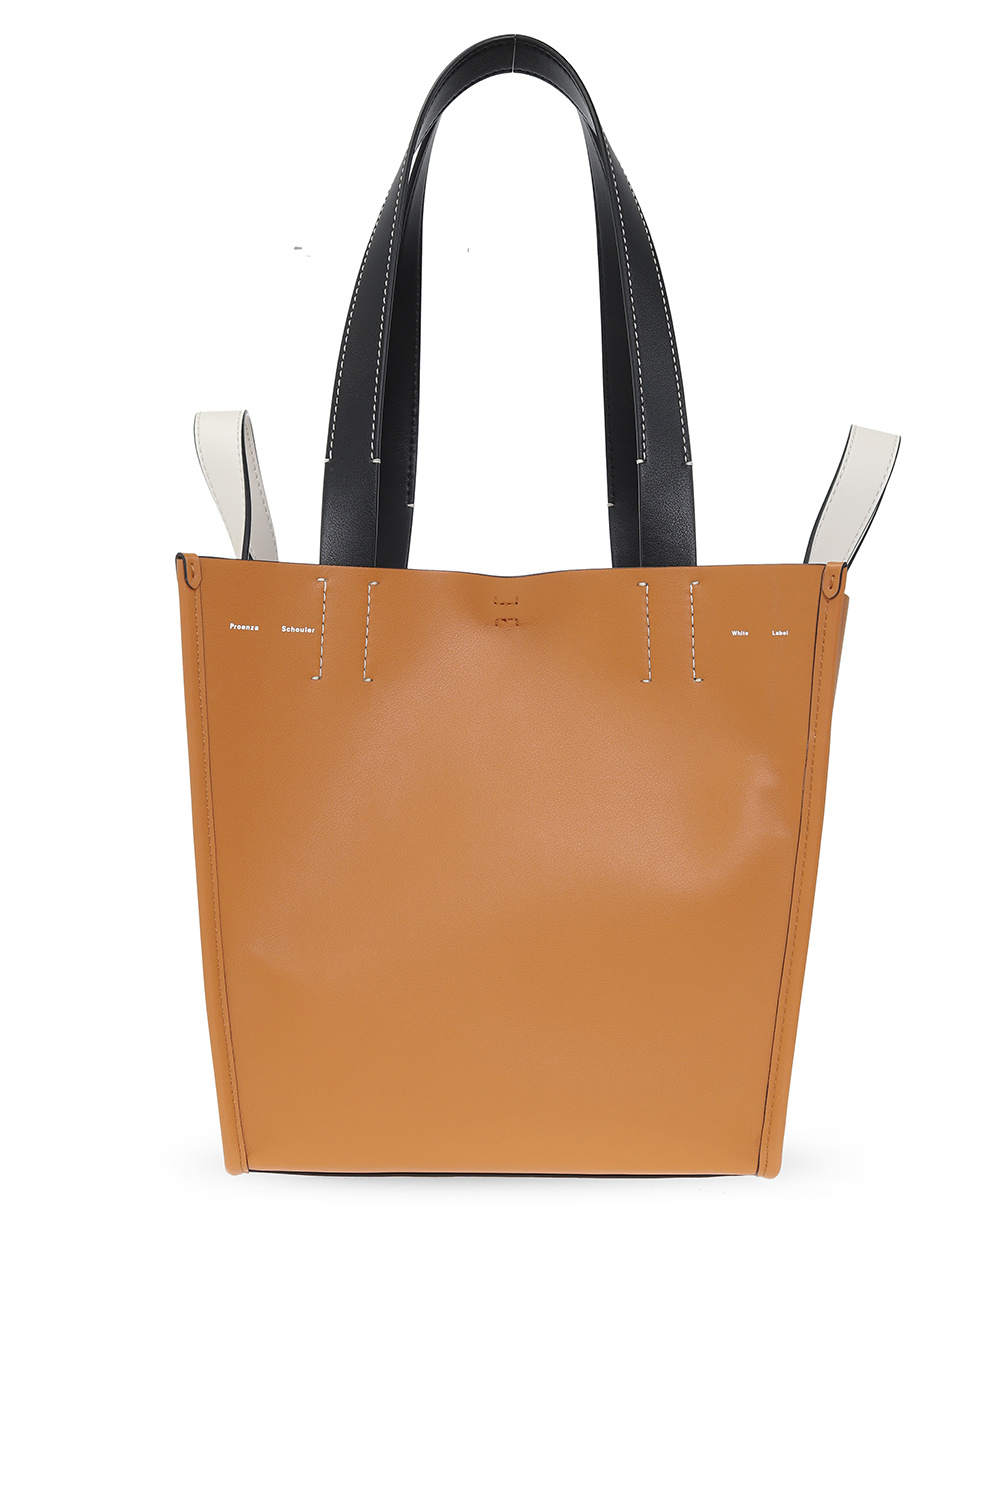 Proenza Schouler White Label Straight ‘Mercer Large’ shopper bag